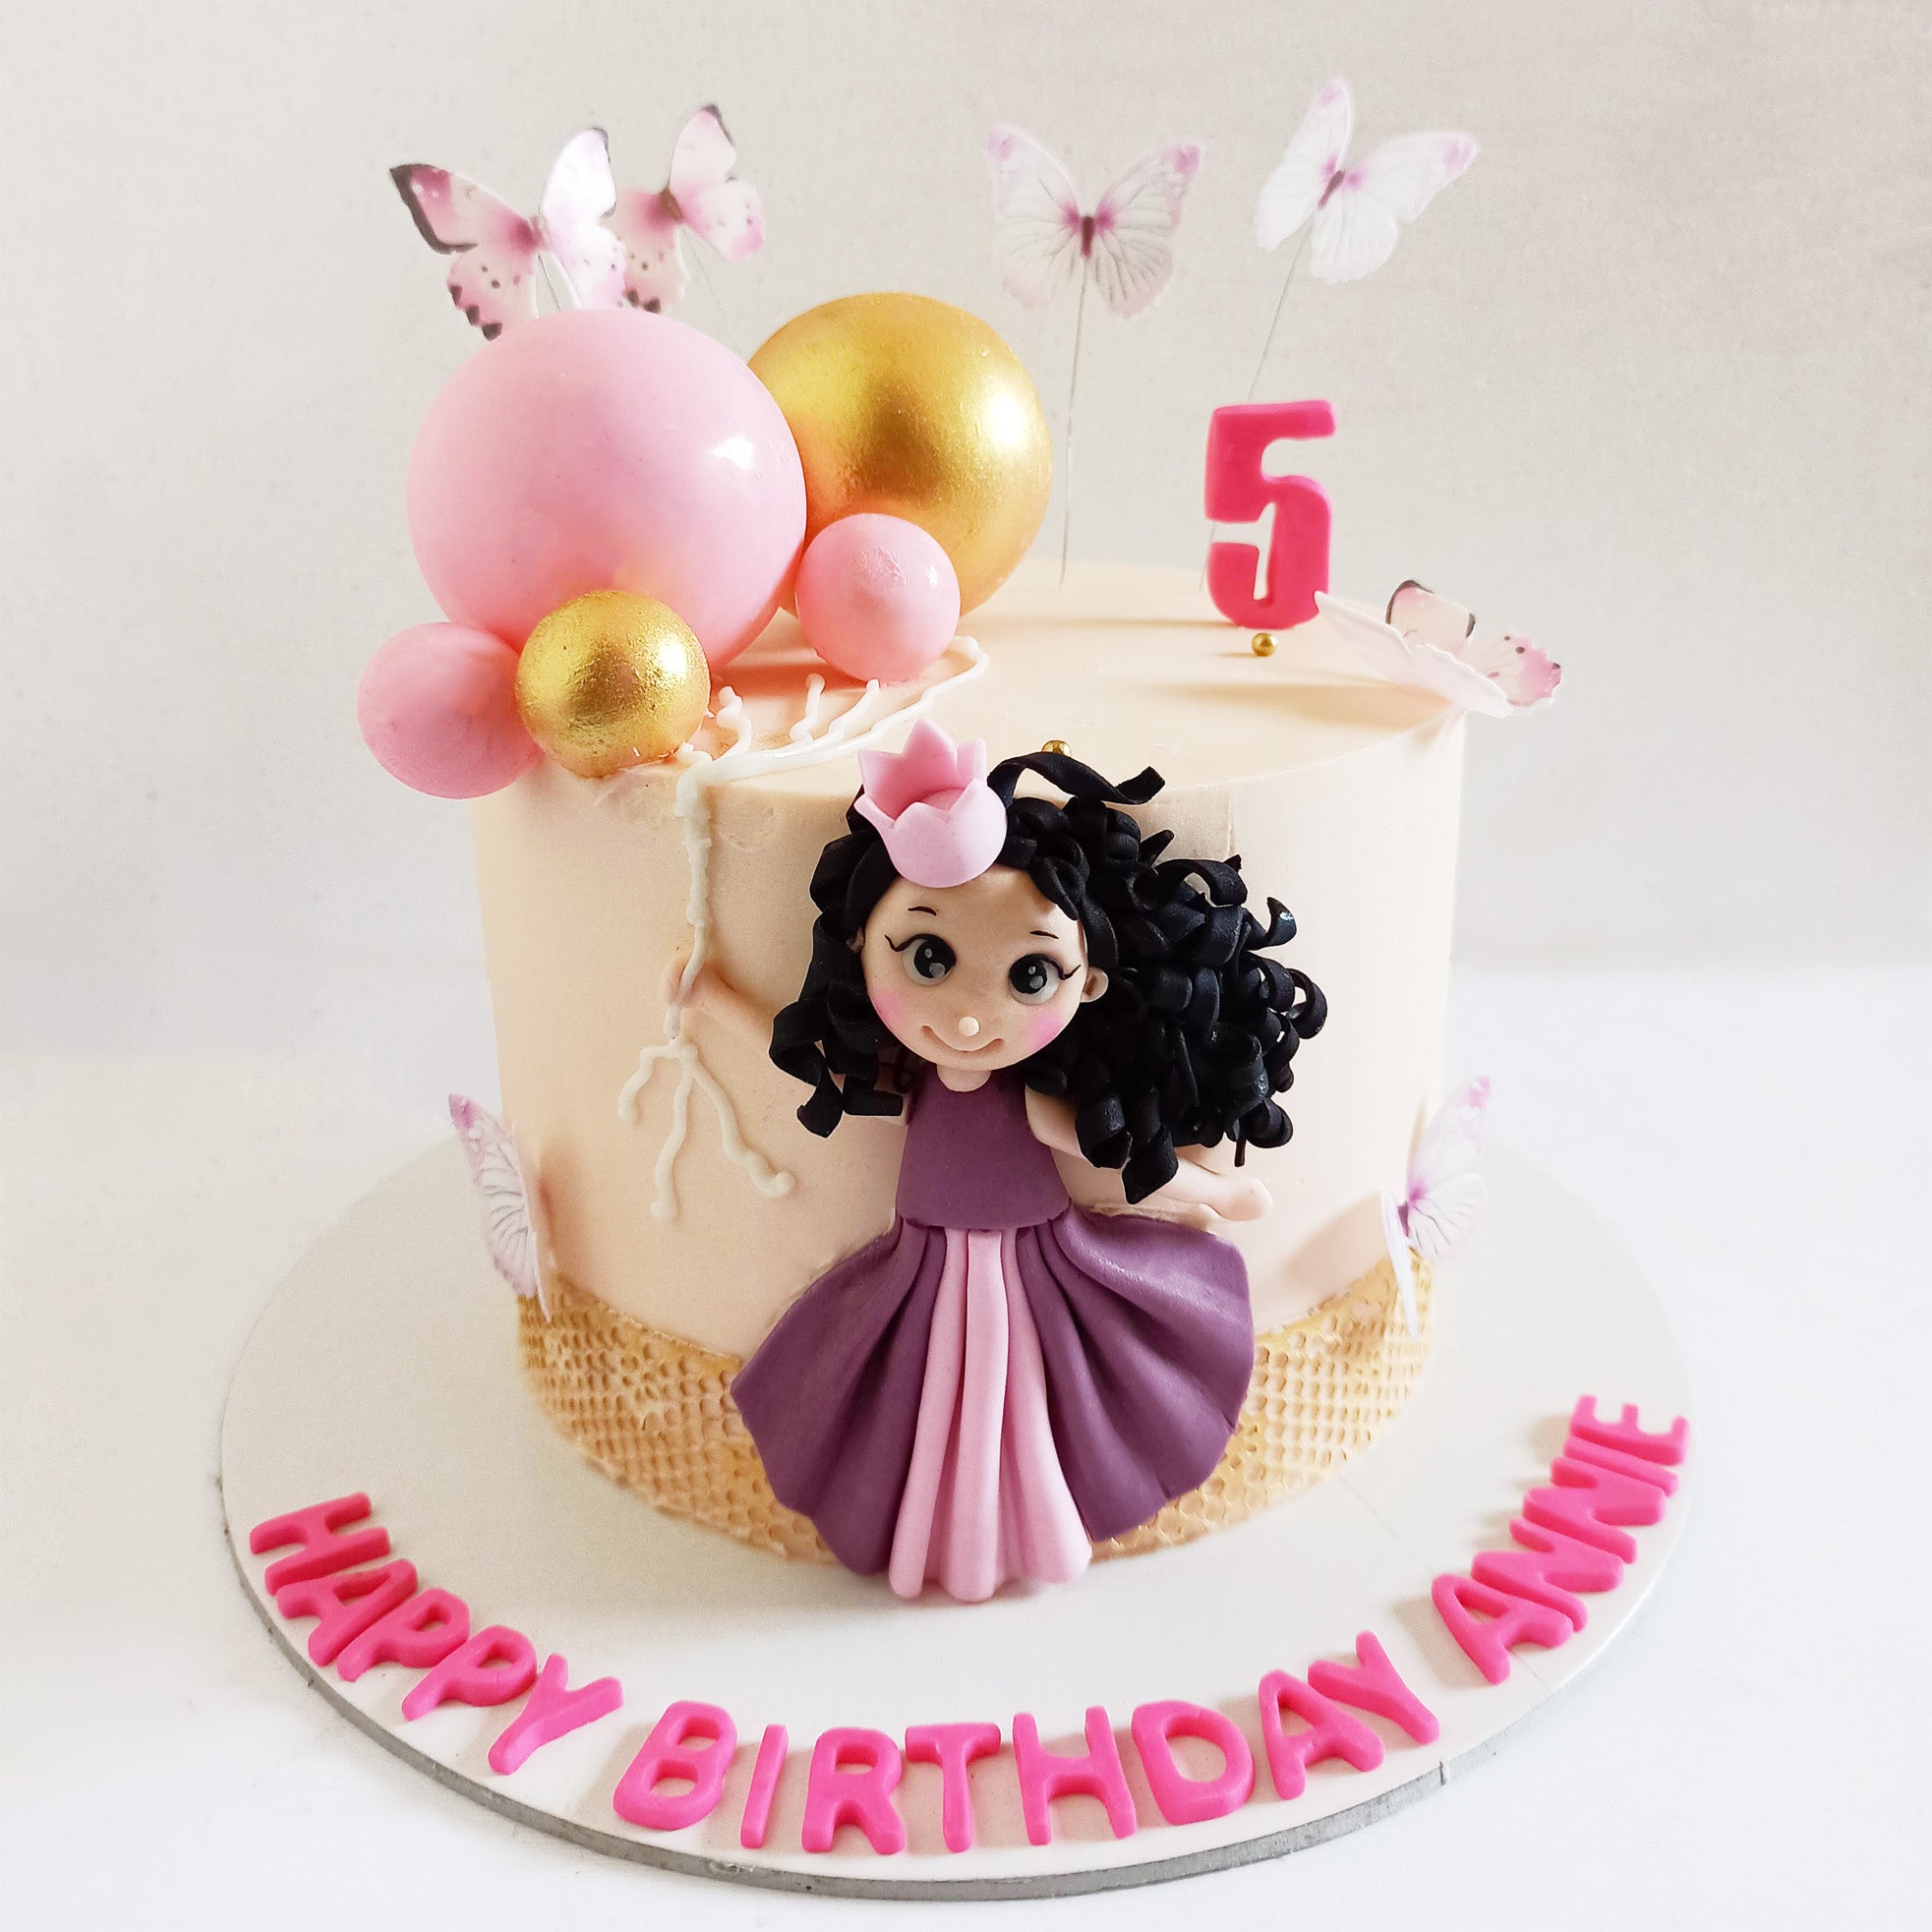 Birthday Balloons and Creative Cakes